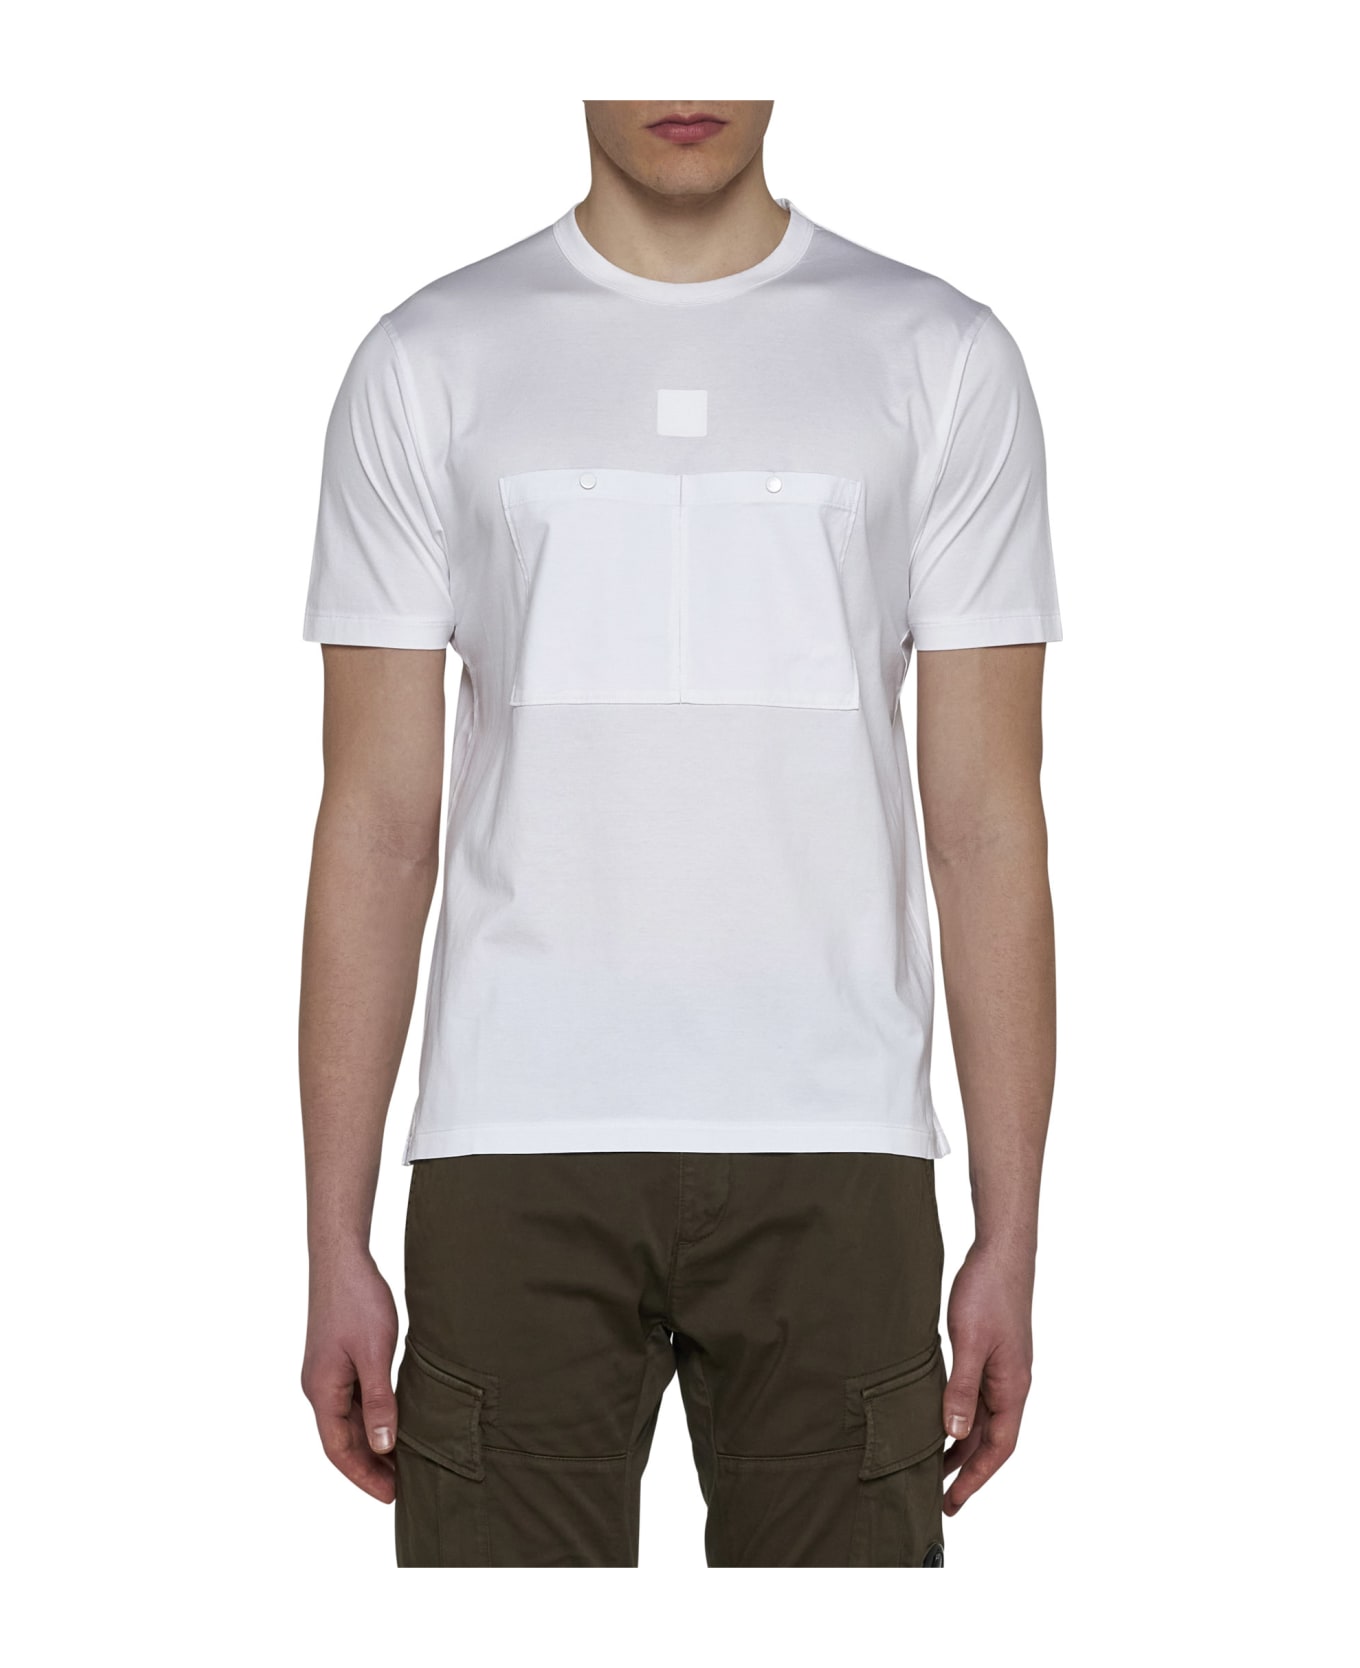 C.P. Company Logo And Pockets Cotton T-shirt - White